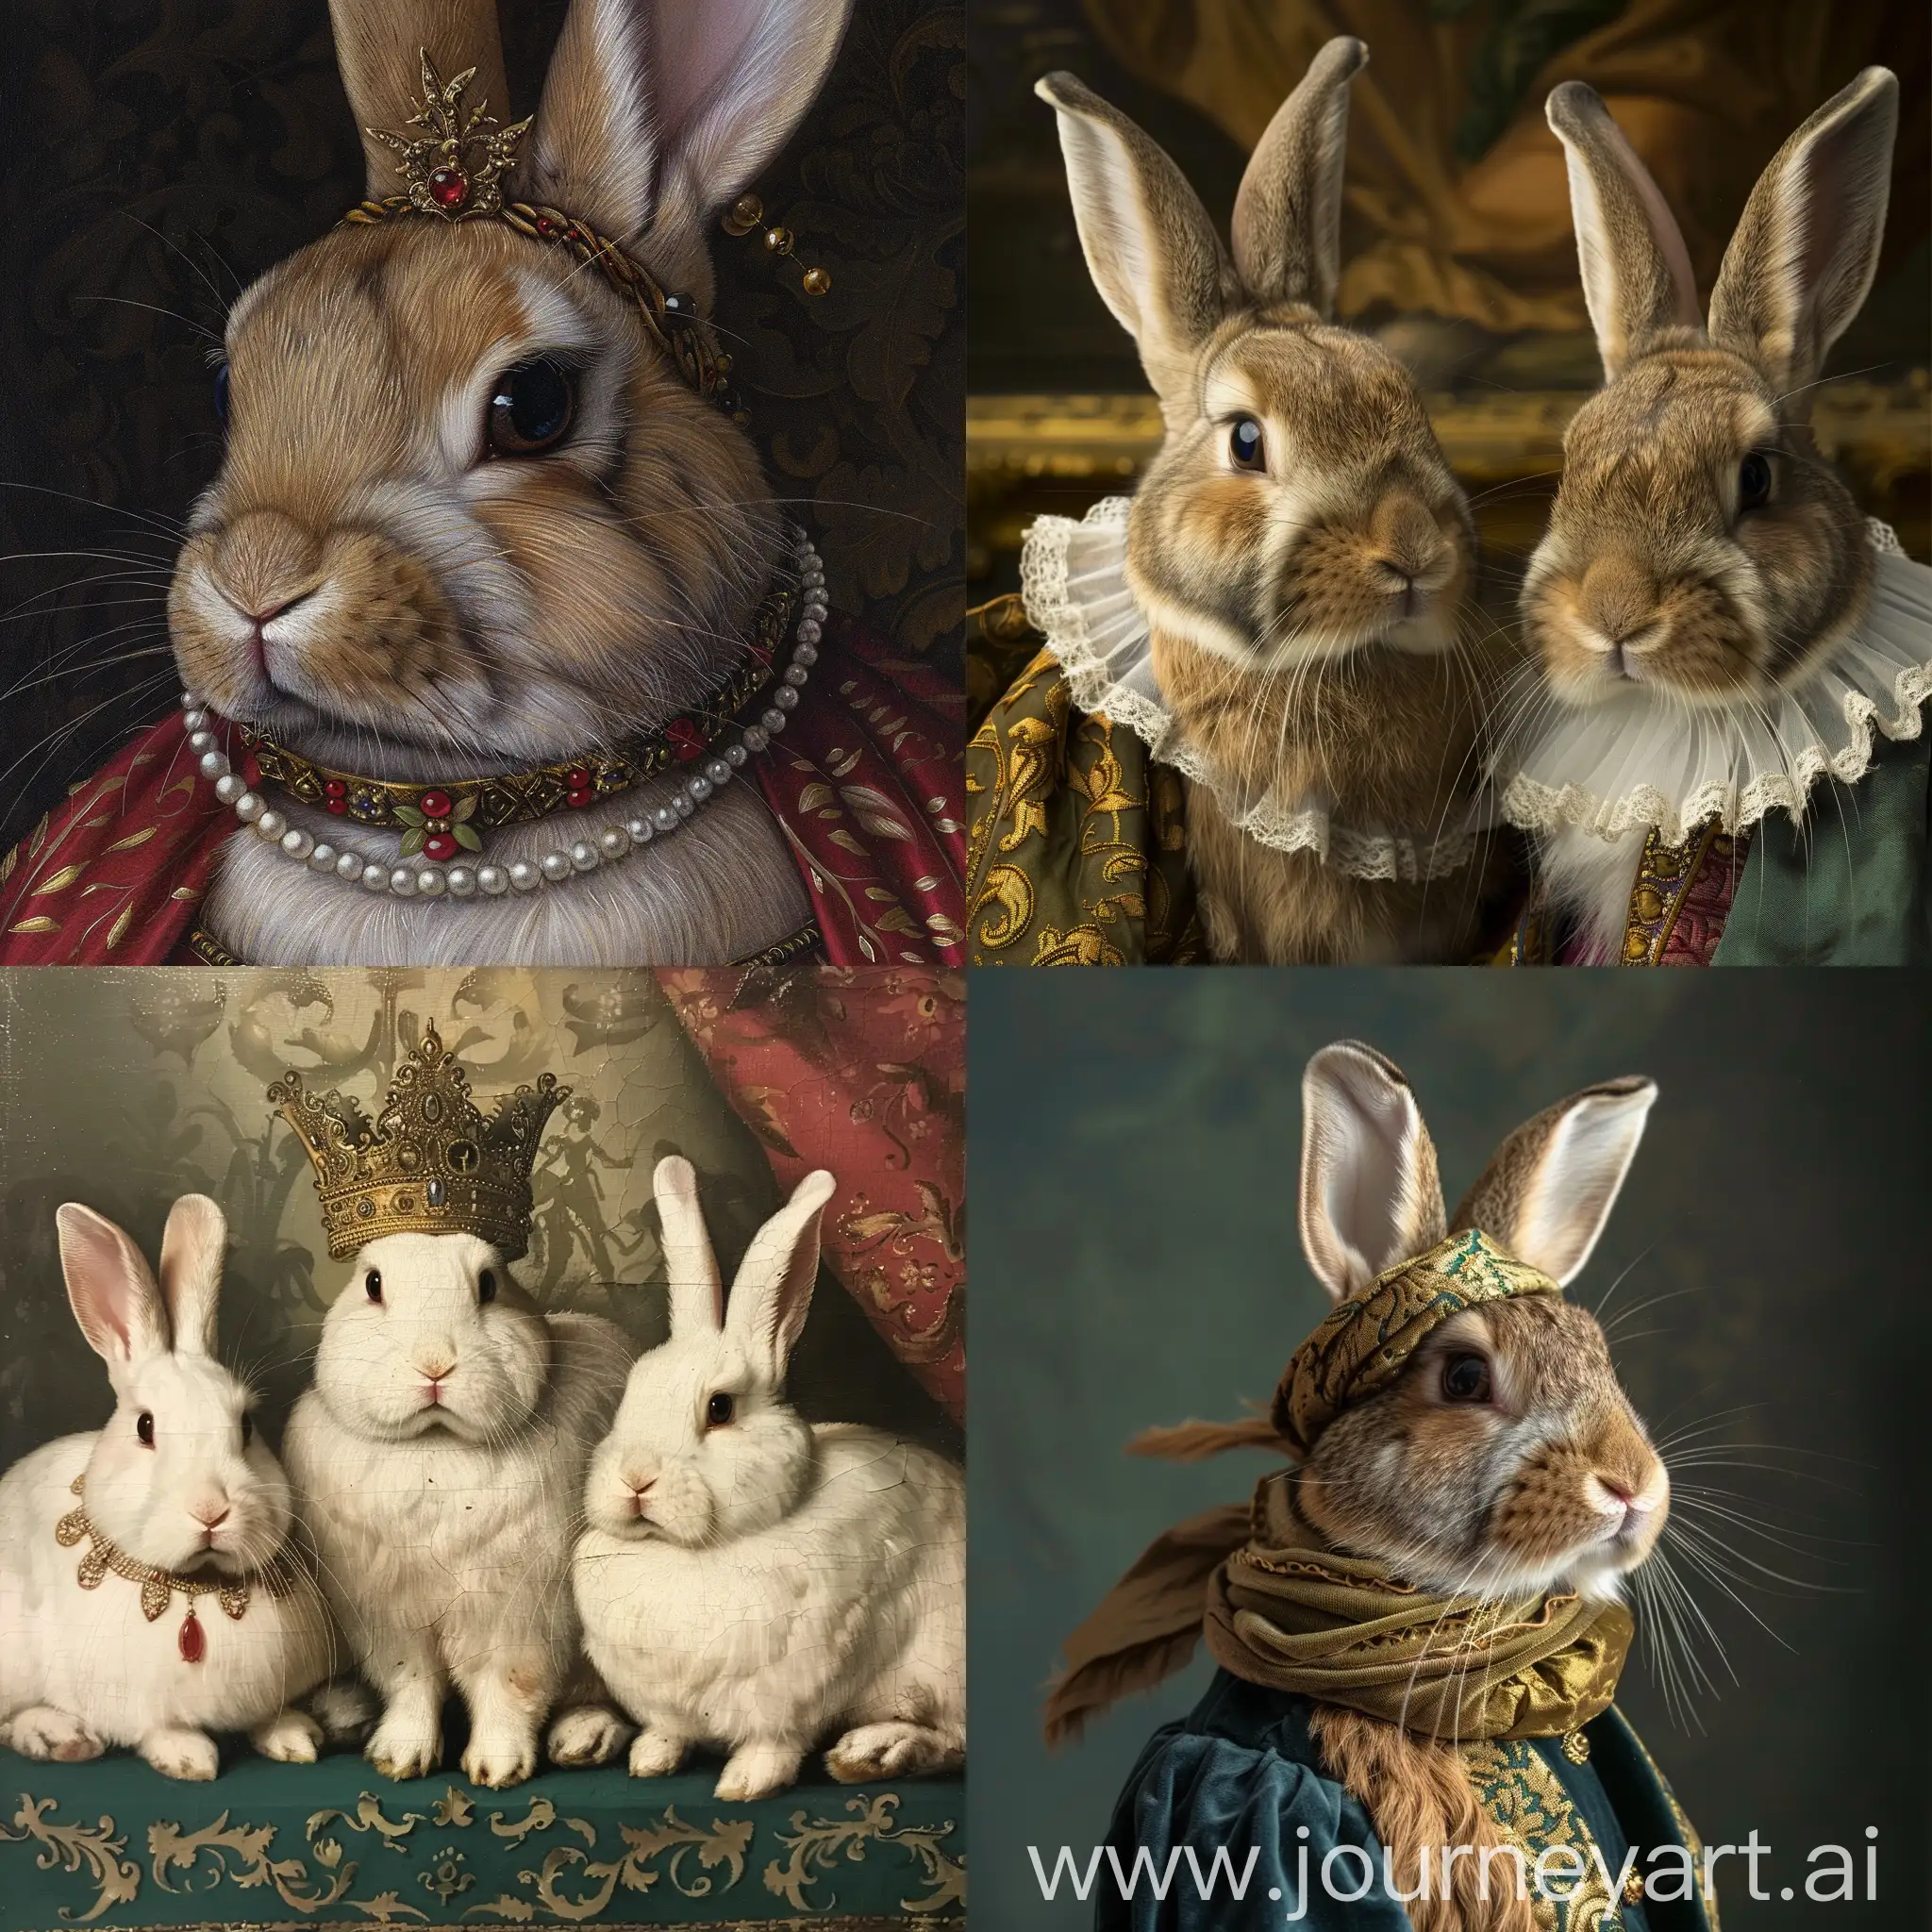 Renaissance-Bunnies-in-Elegant-Attire